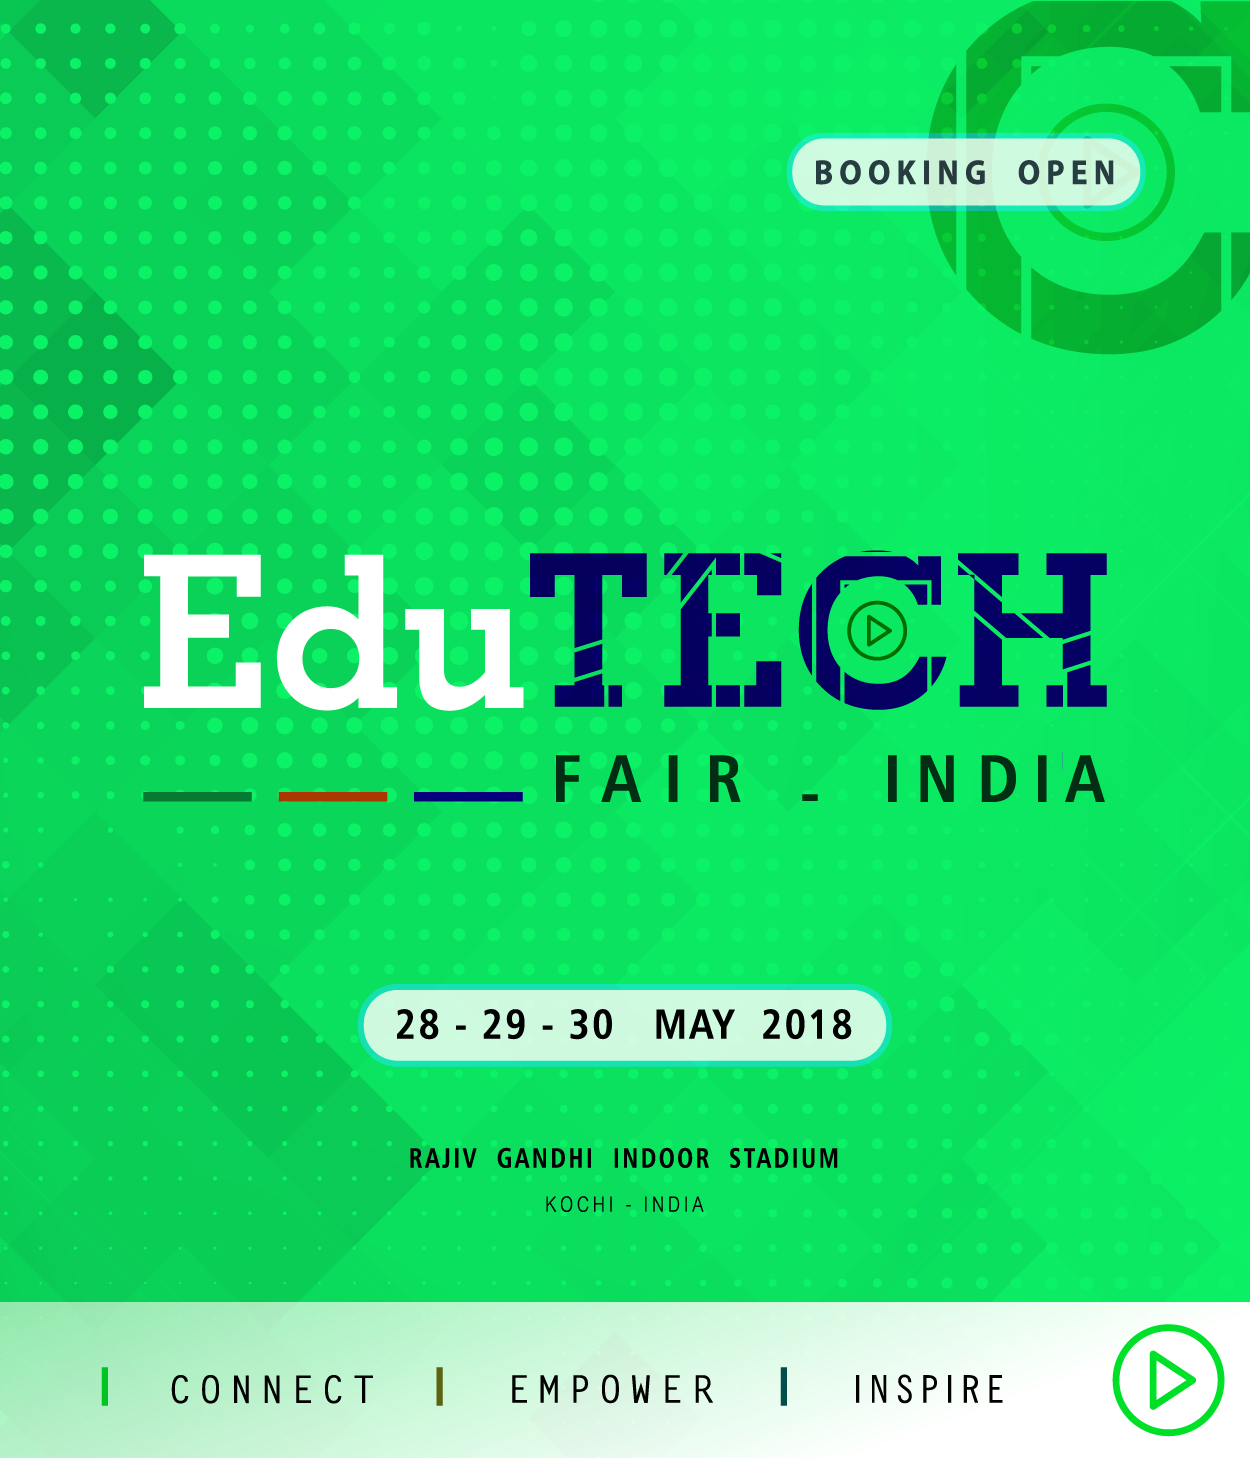 EduTech Fair 2018